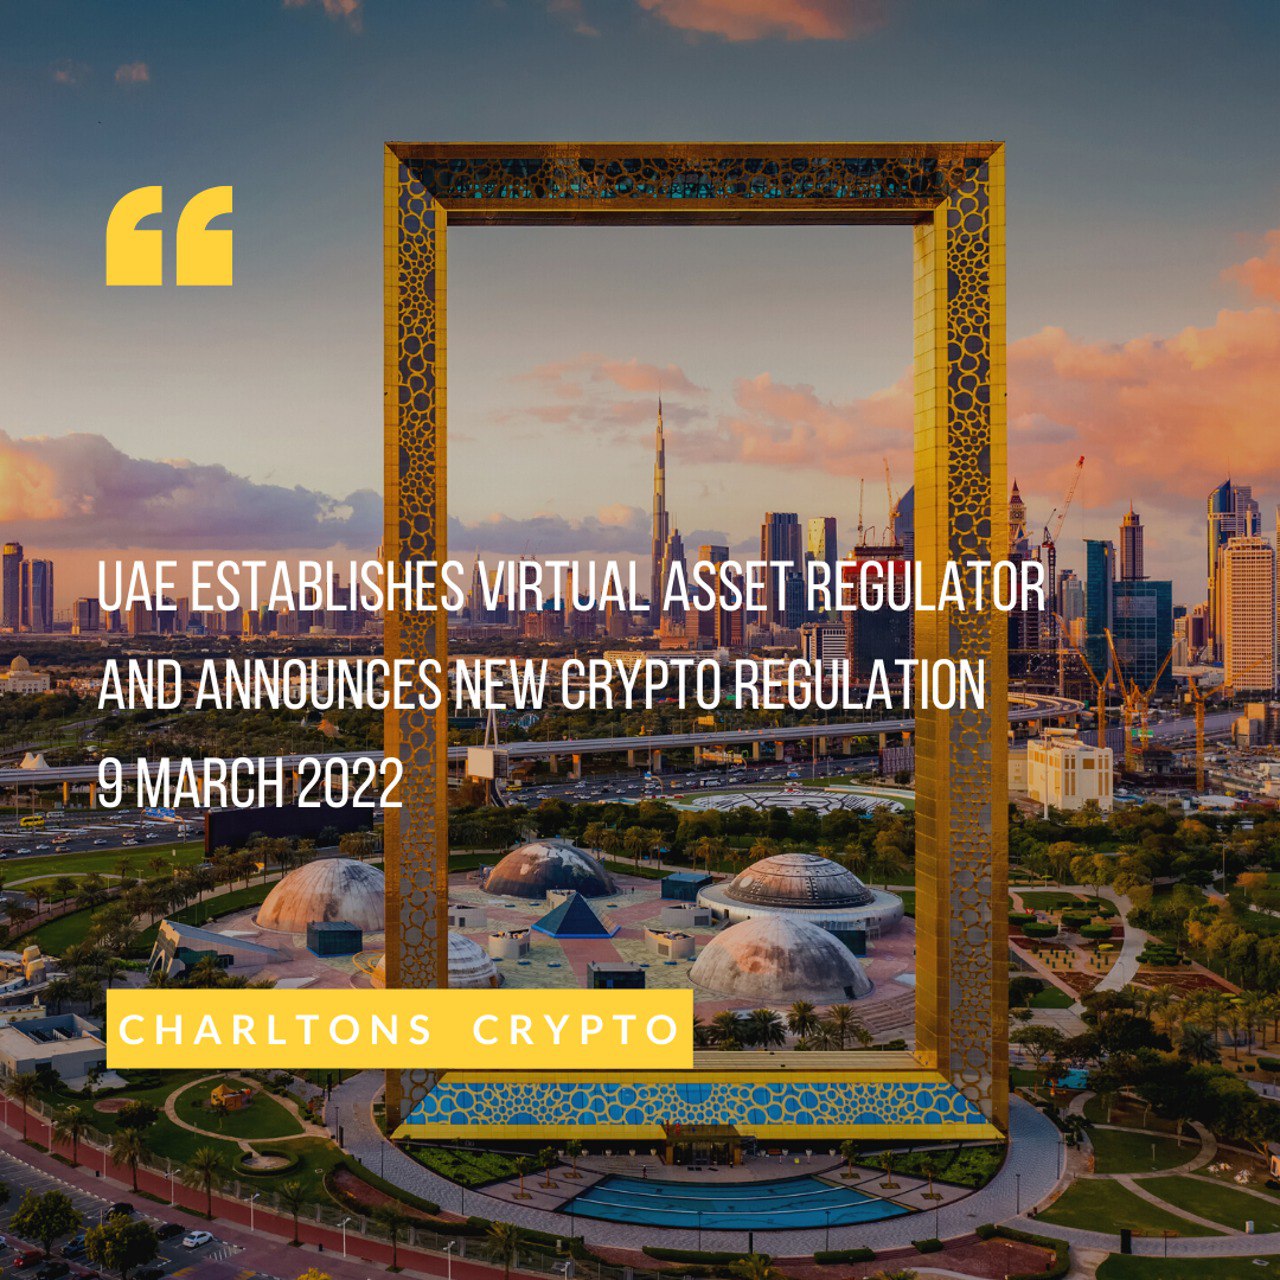 UAE establishes virtual asset regulator and announces new crypto regulation 9 March 2022